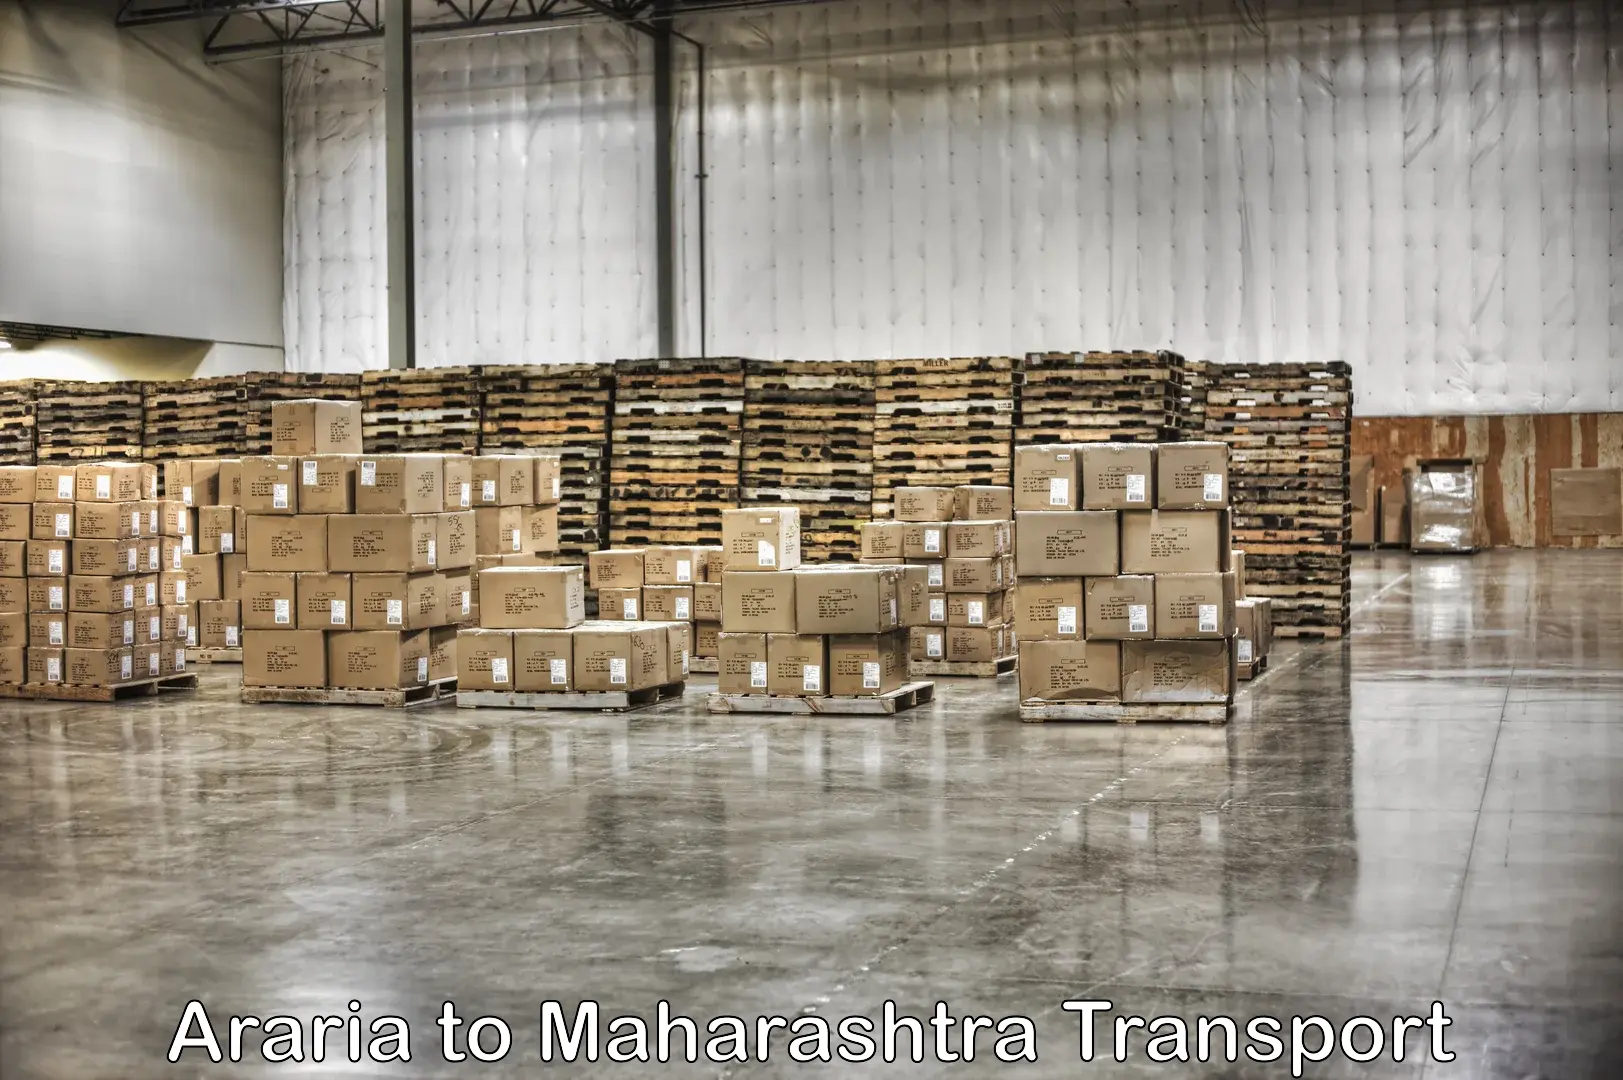 Shipping partner Araria to Khandala Pune